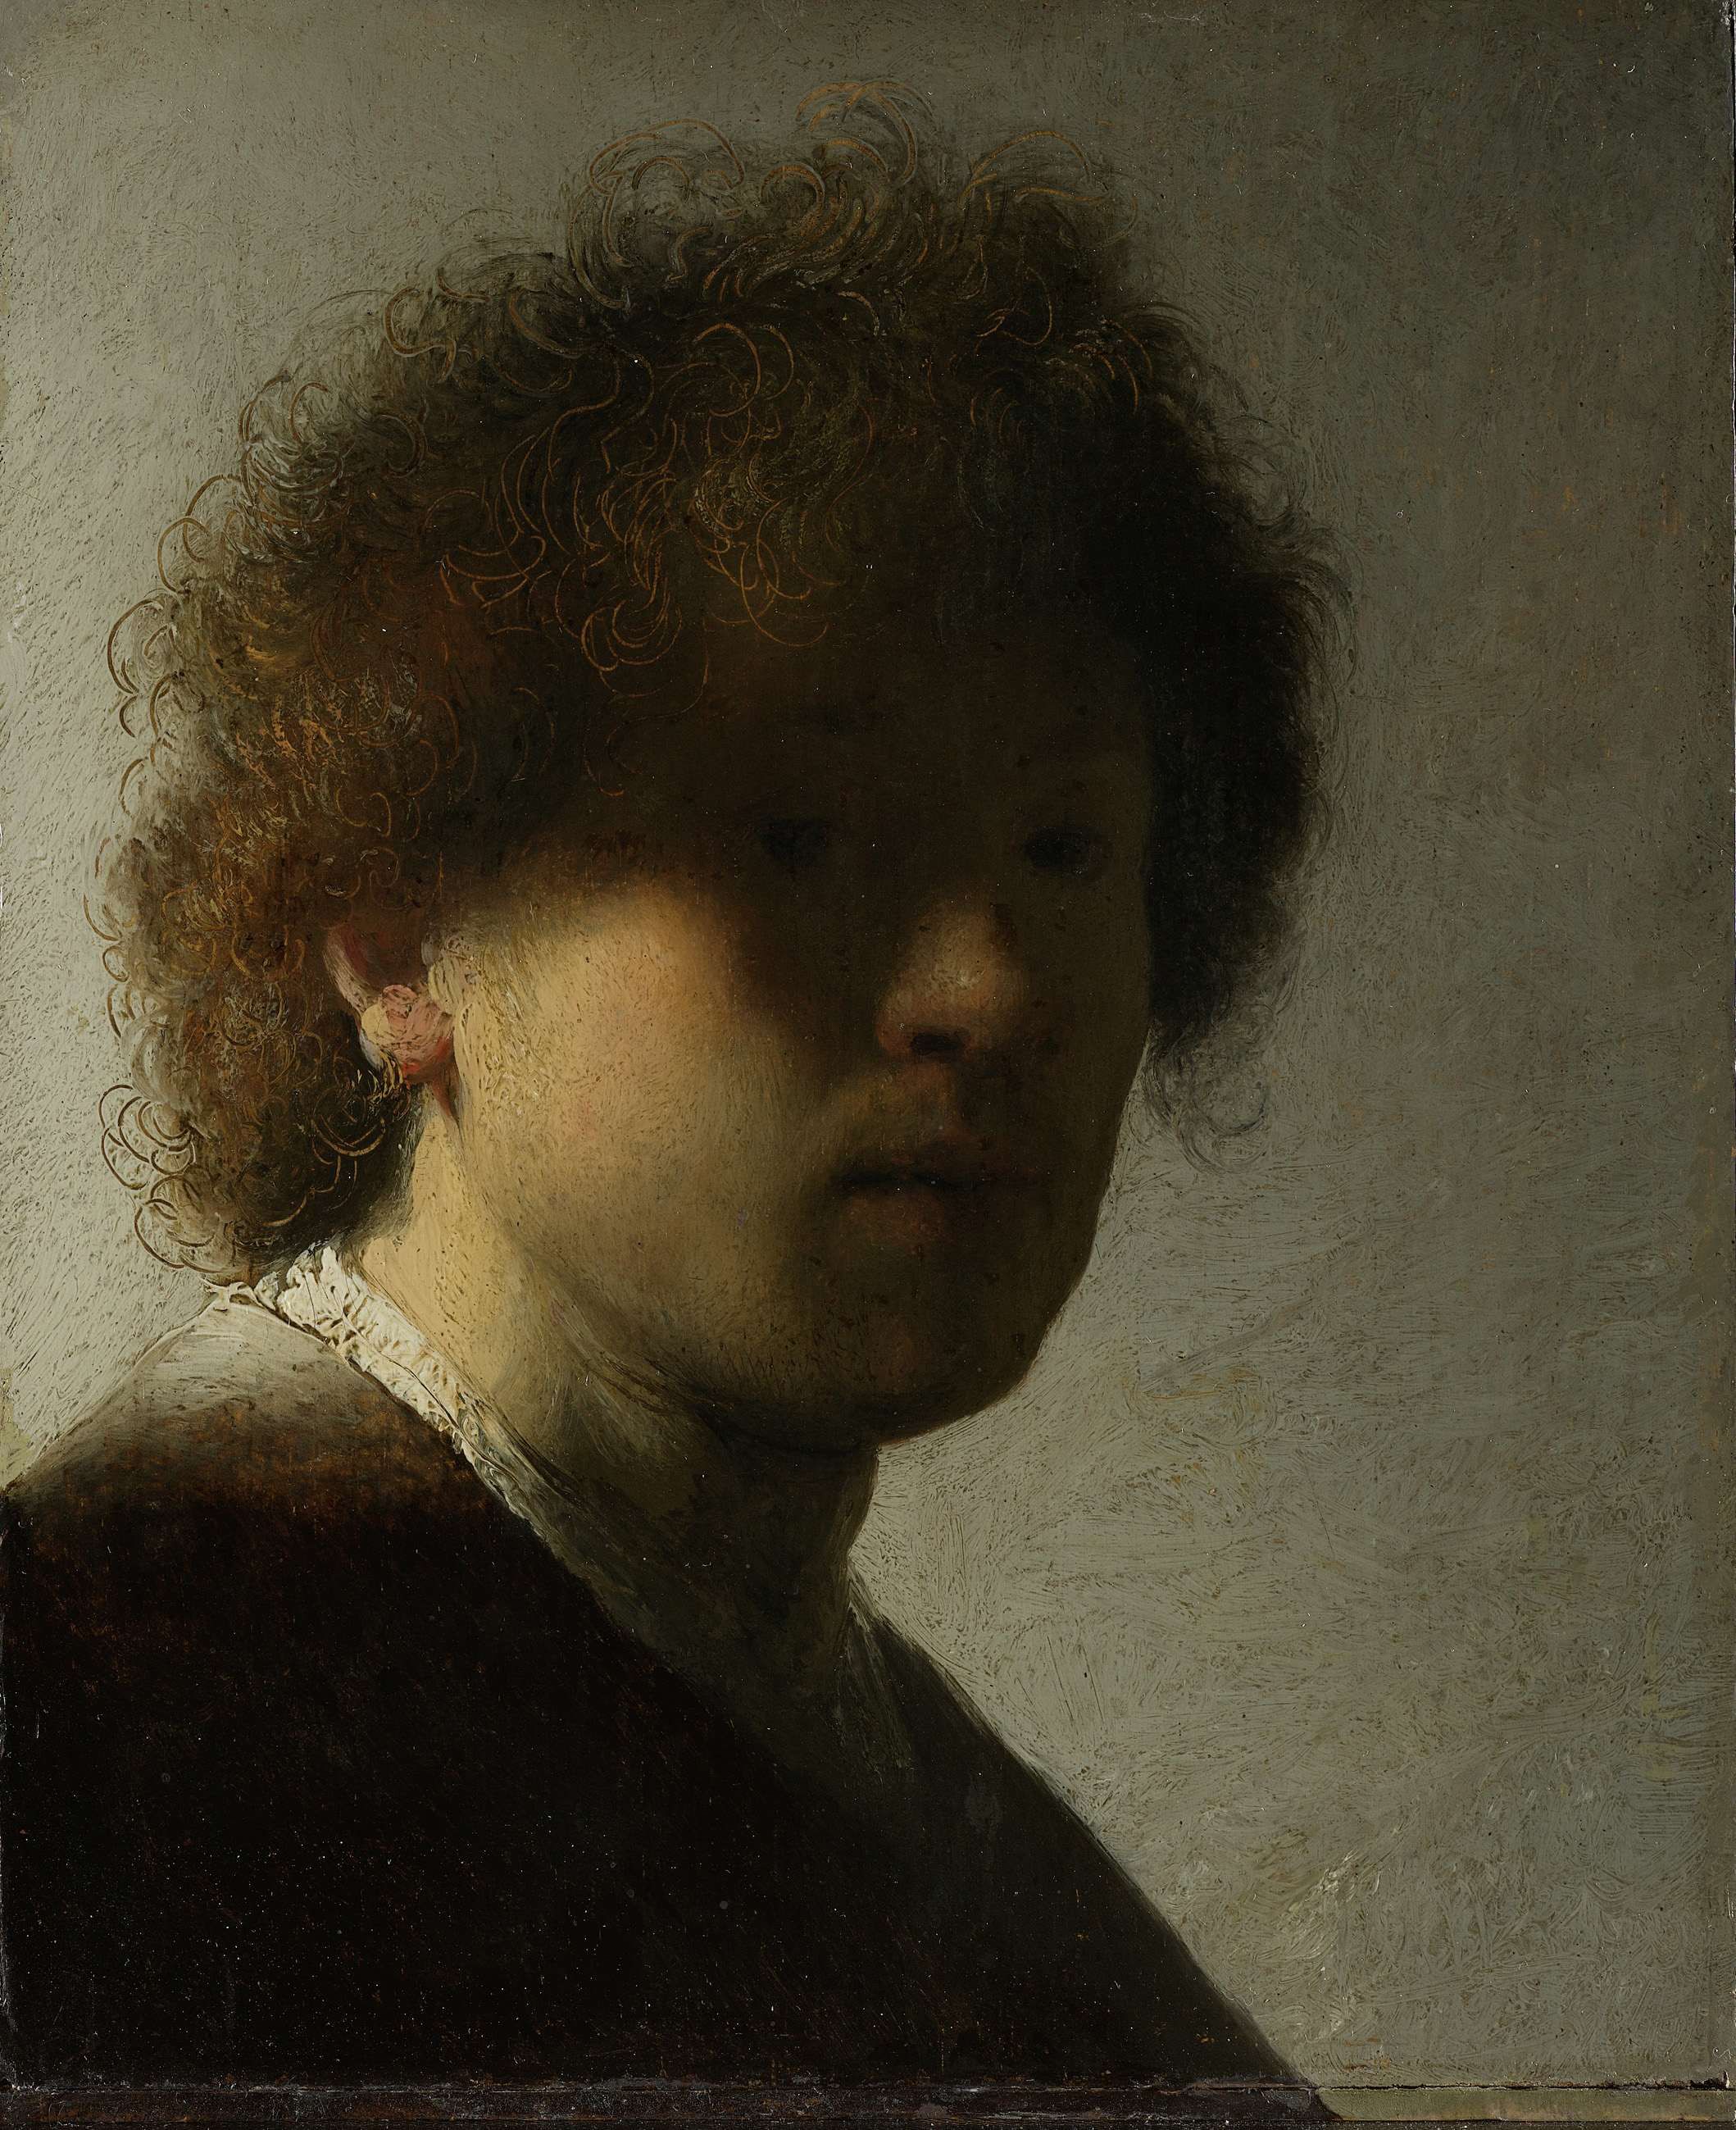 Rembrandt, Dipinto storico (1626 circa; olio su tavola, 90 x 122 cm; Leiden, Museum de Lakenhal)
